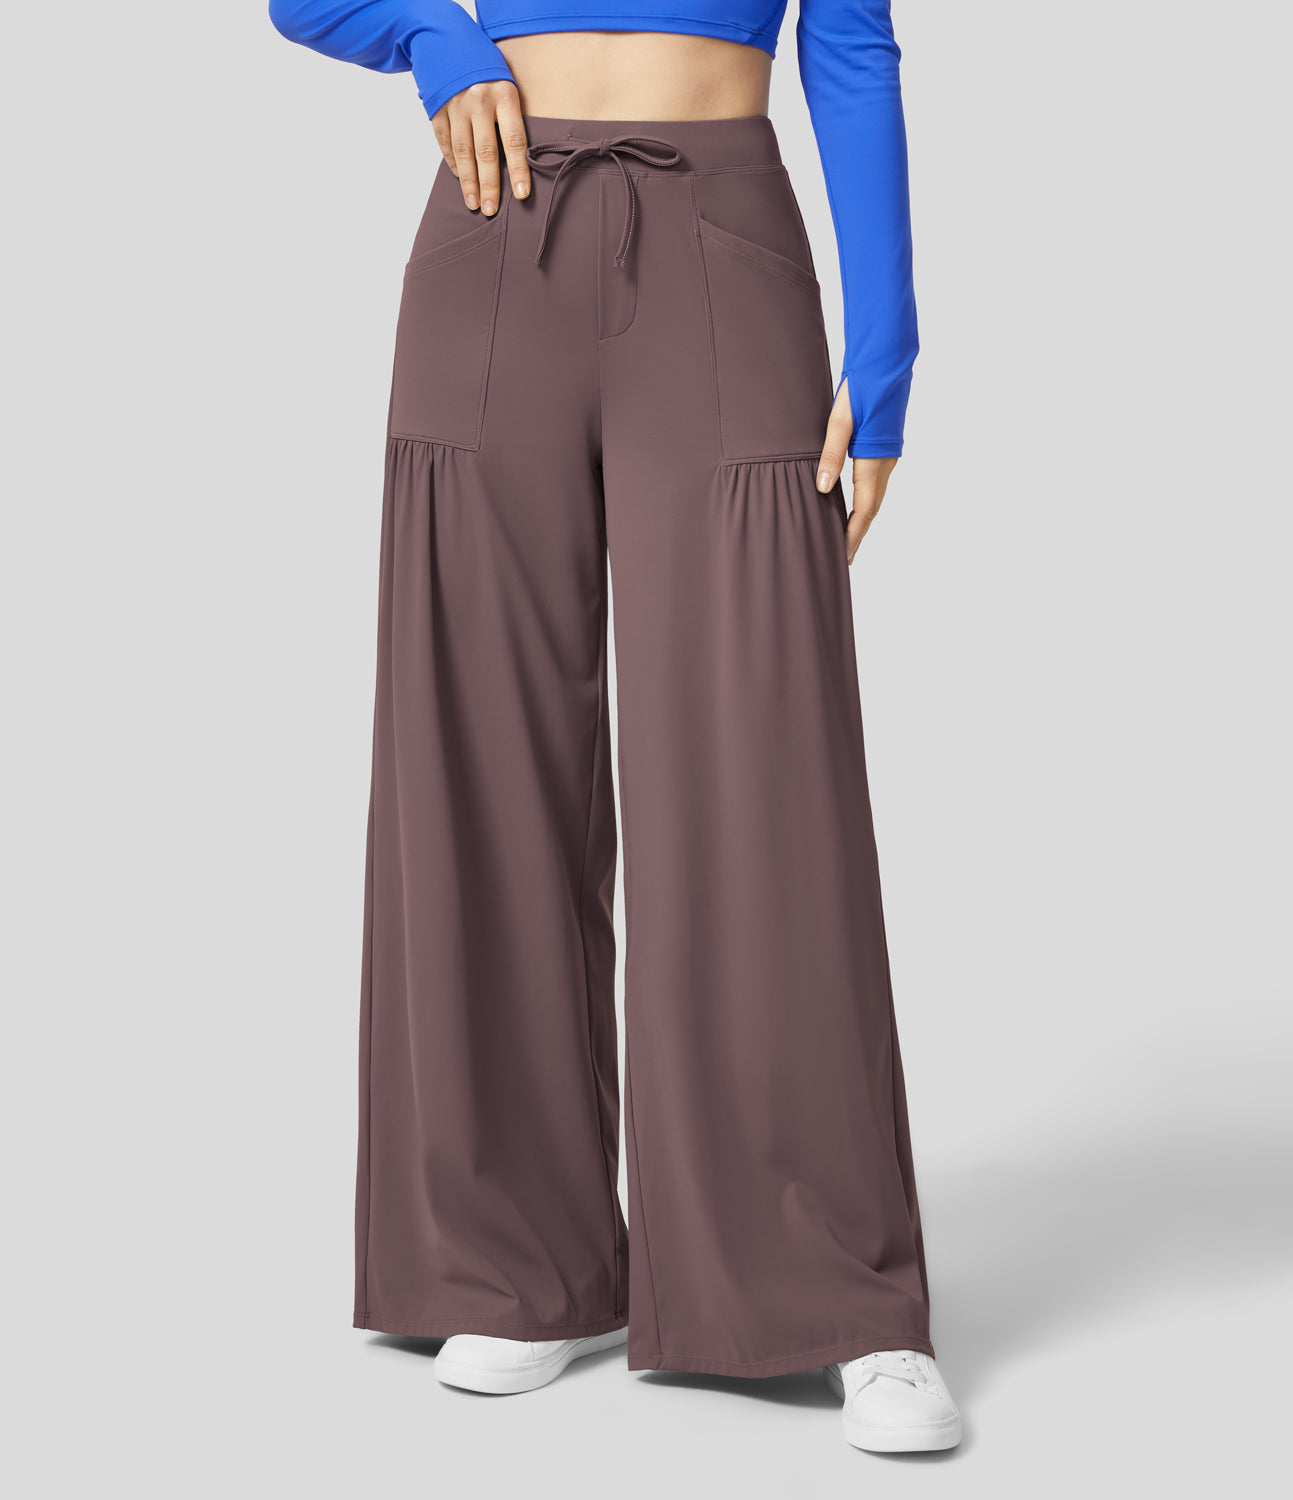 

Halara High Waisted Drawstring Multiple Pockets Plicated Wide Leg Yoga Pants - Deep Tea Brown